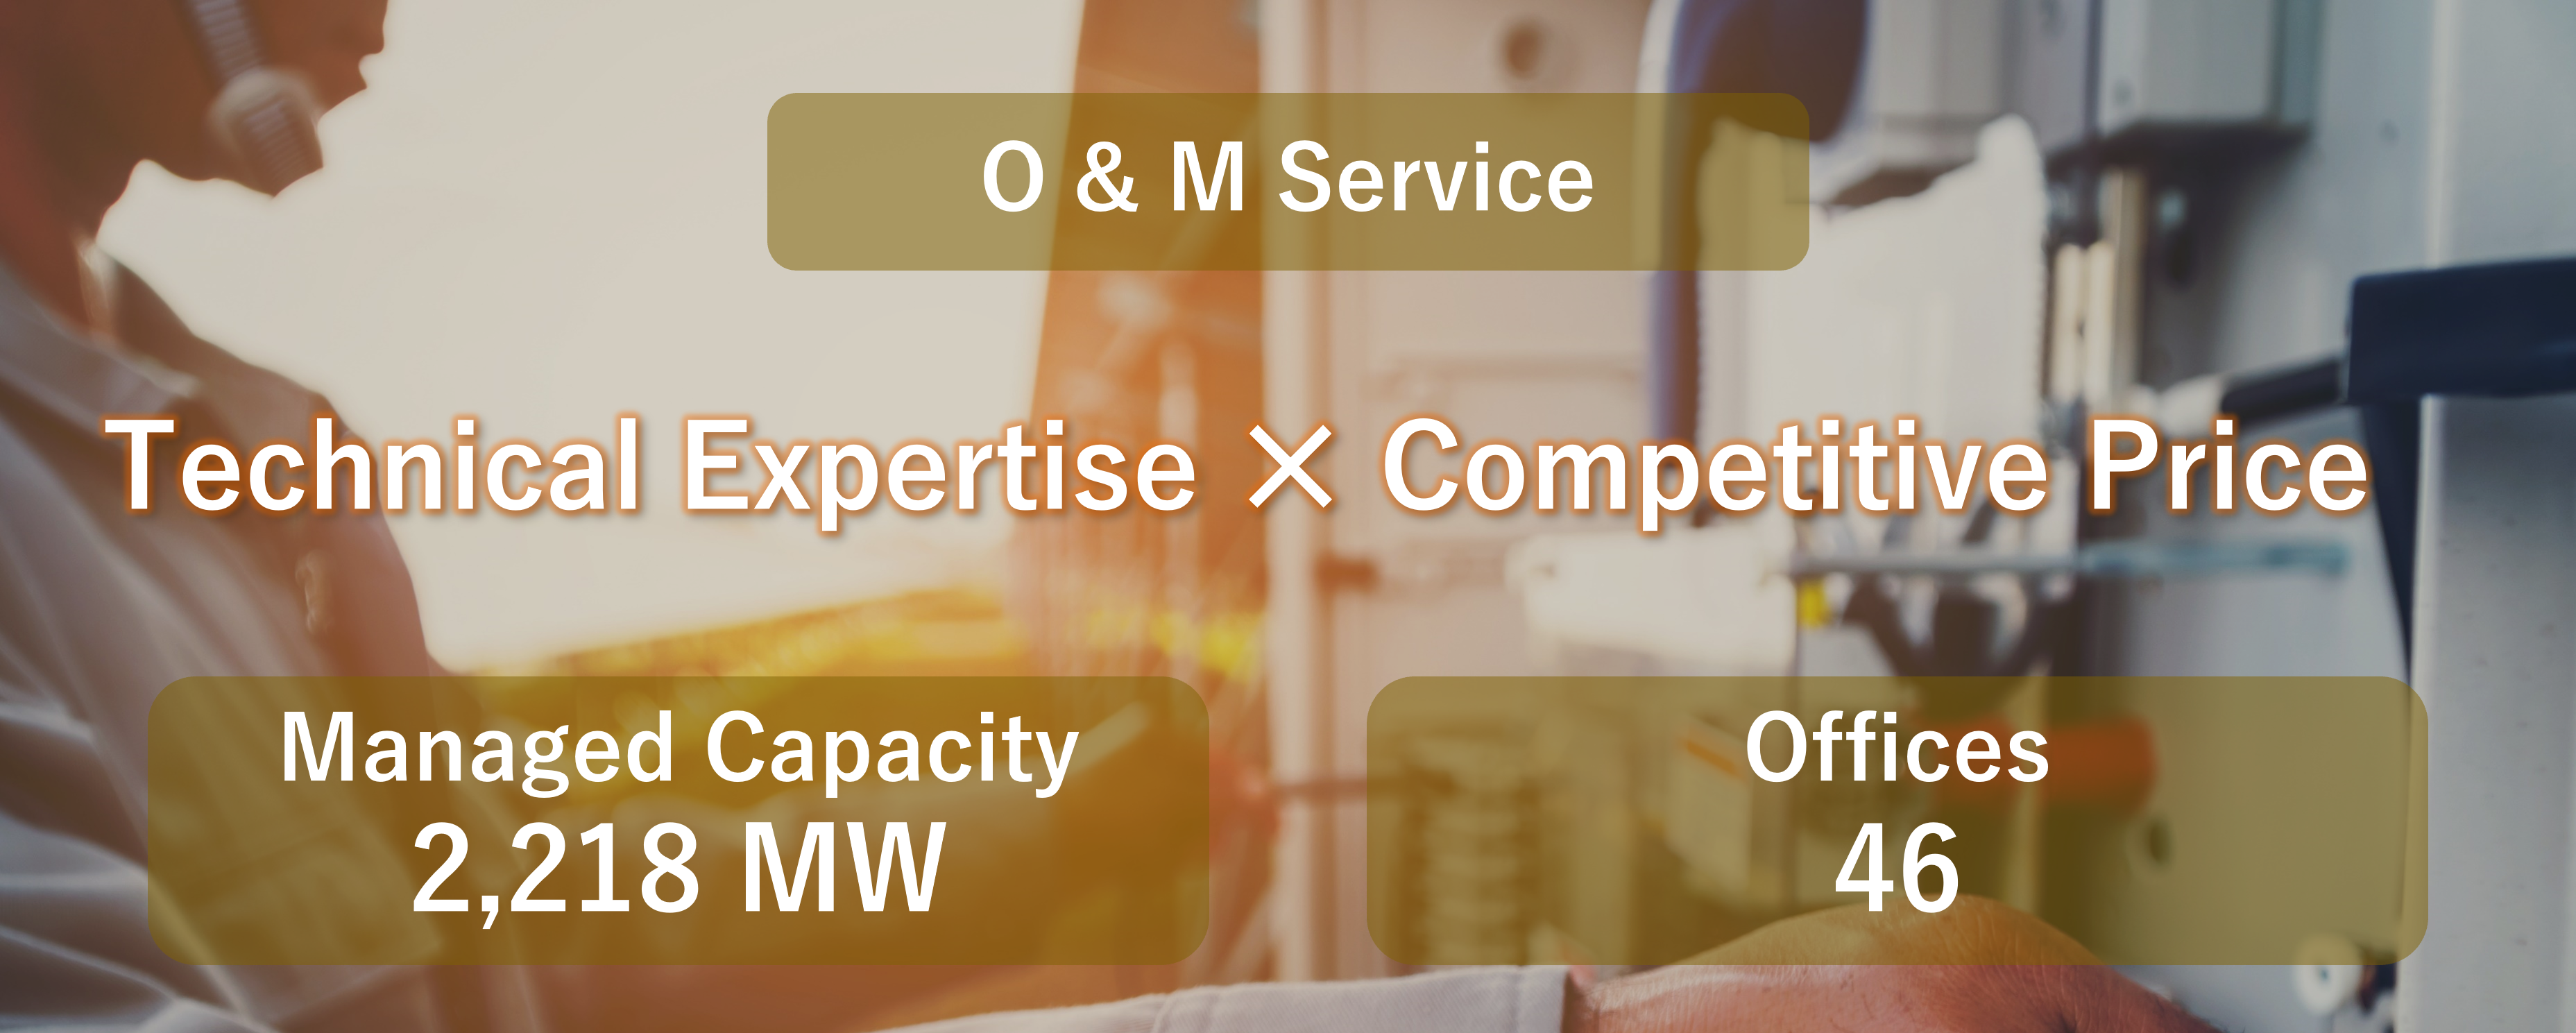 O&M services